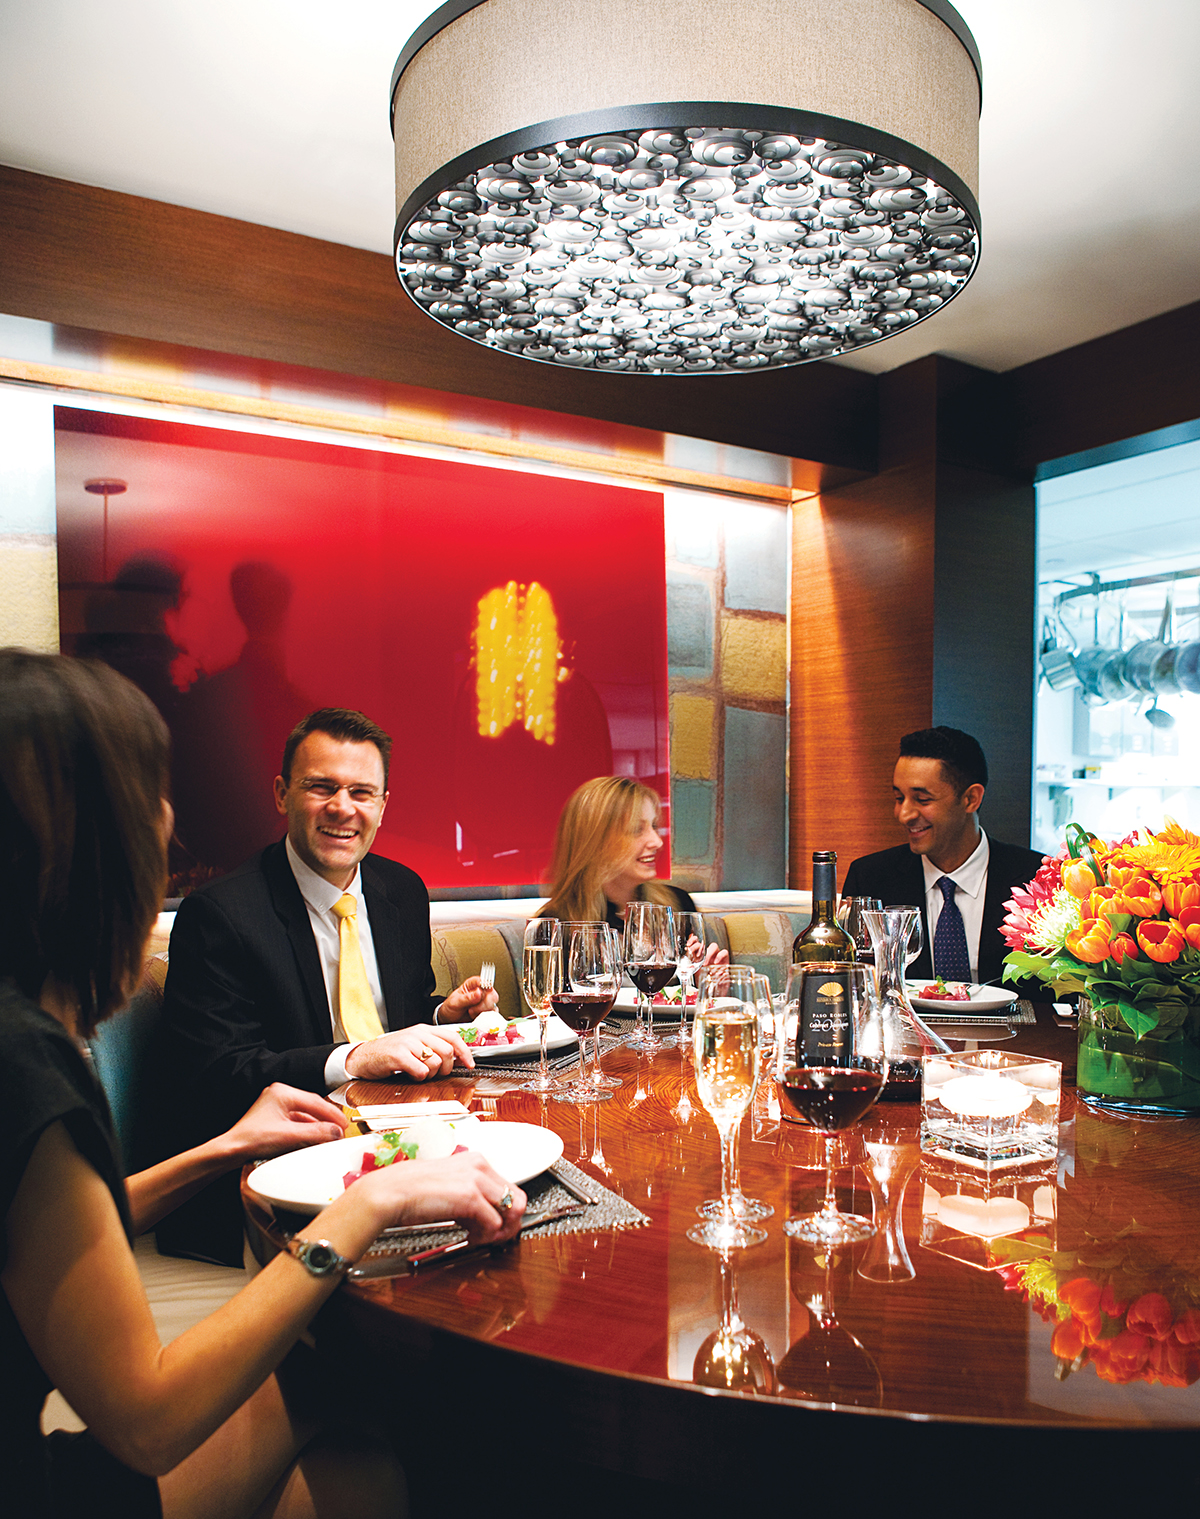 The chef's table at Asana in the Mandarin Oriental. Photograph by Keller + Keller.